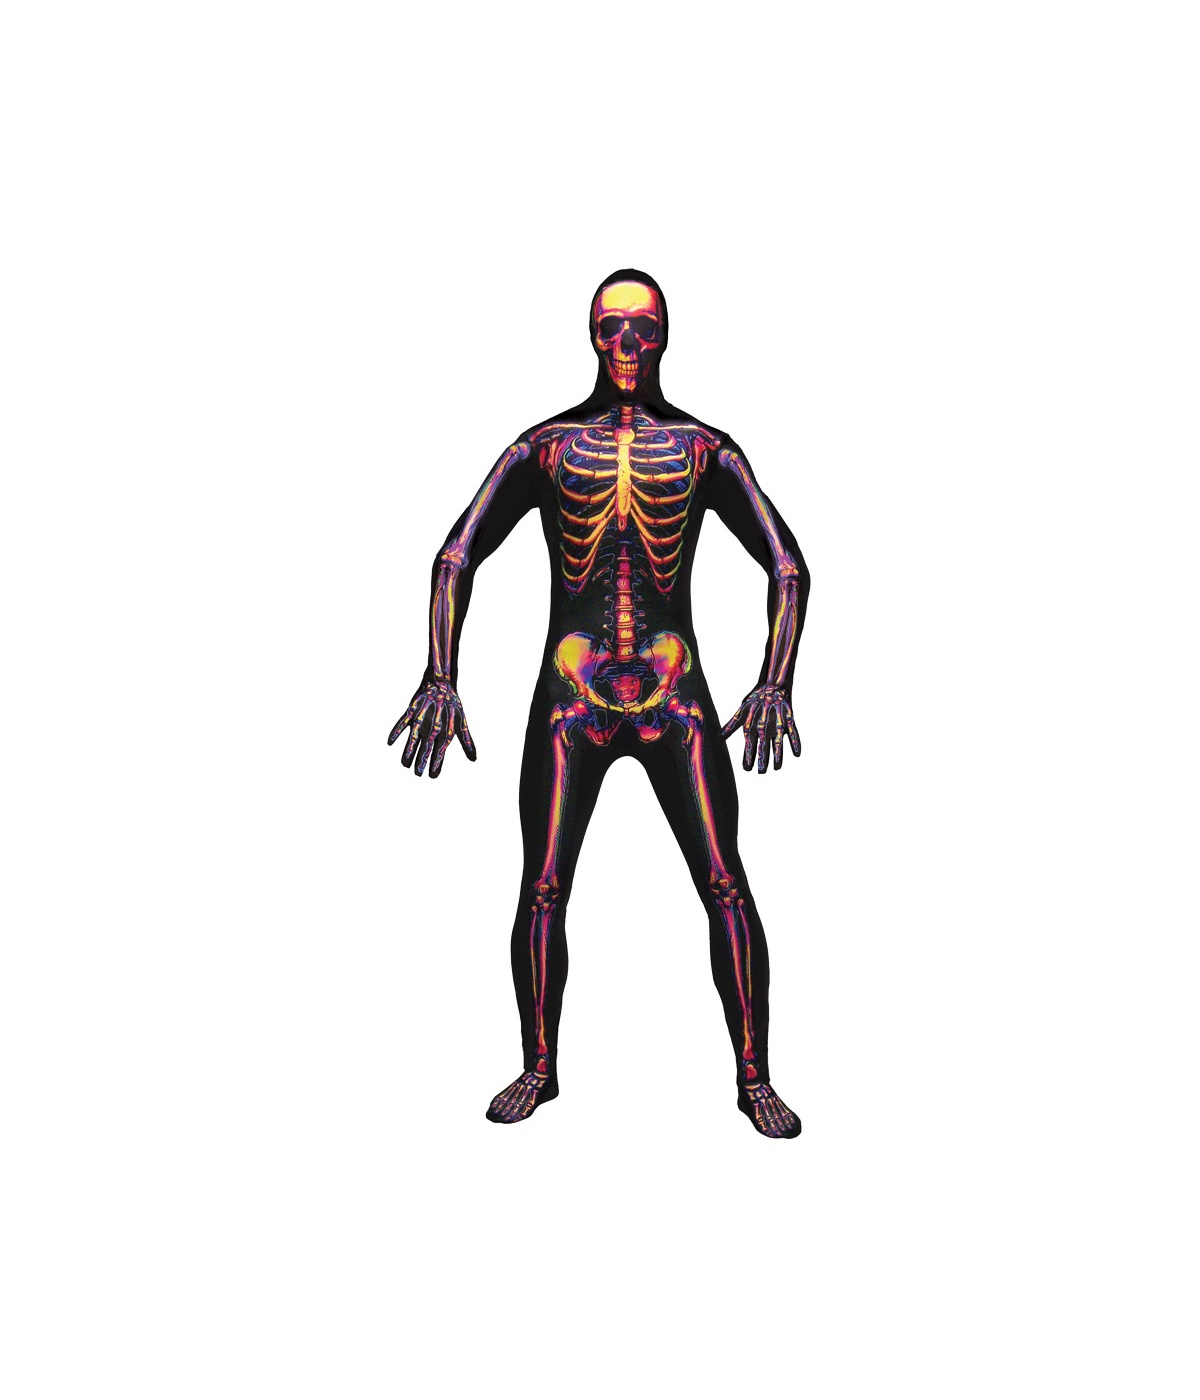  Mens Skeleton Skin Suit Costume